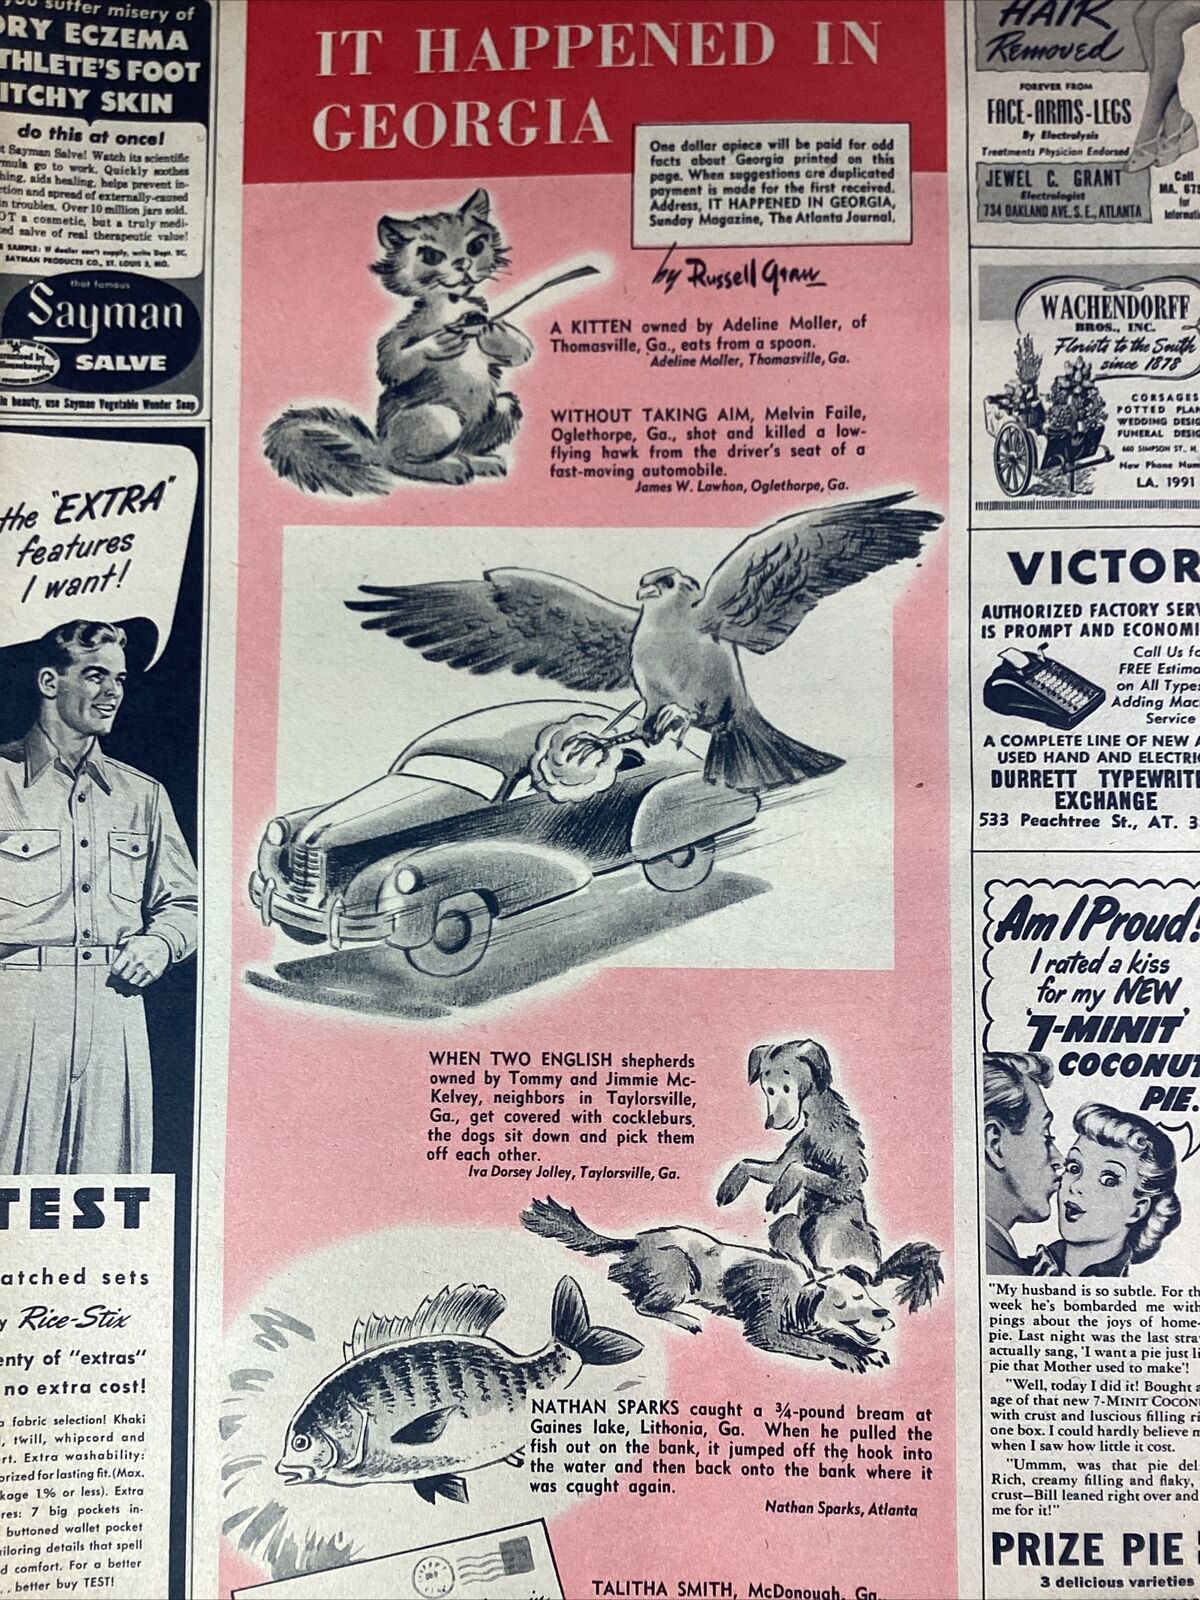 Atlanta GA Print Ad 1948 AJC Original Rare Moller Faile McKelvey Pie Wachendorff